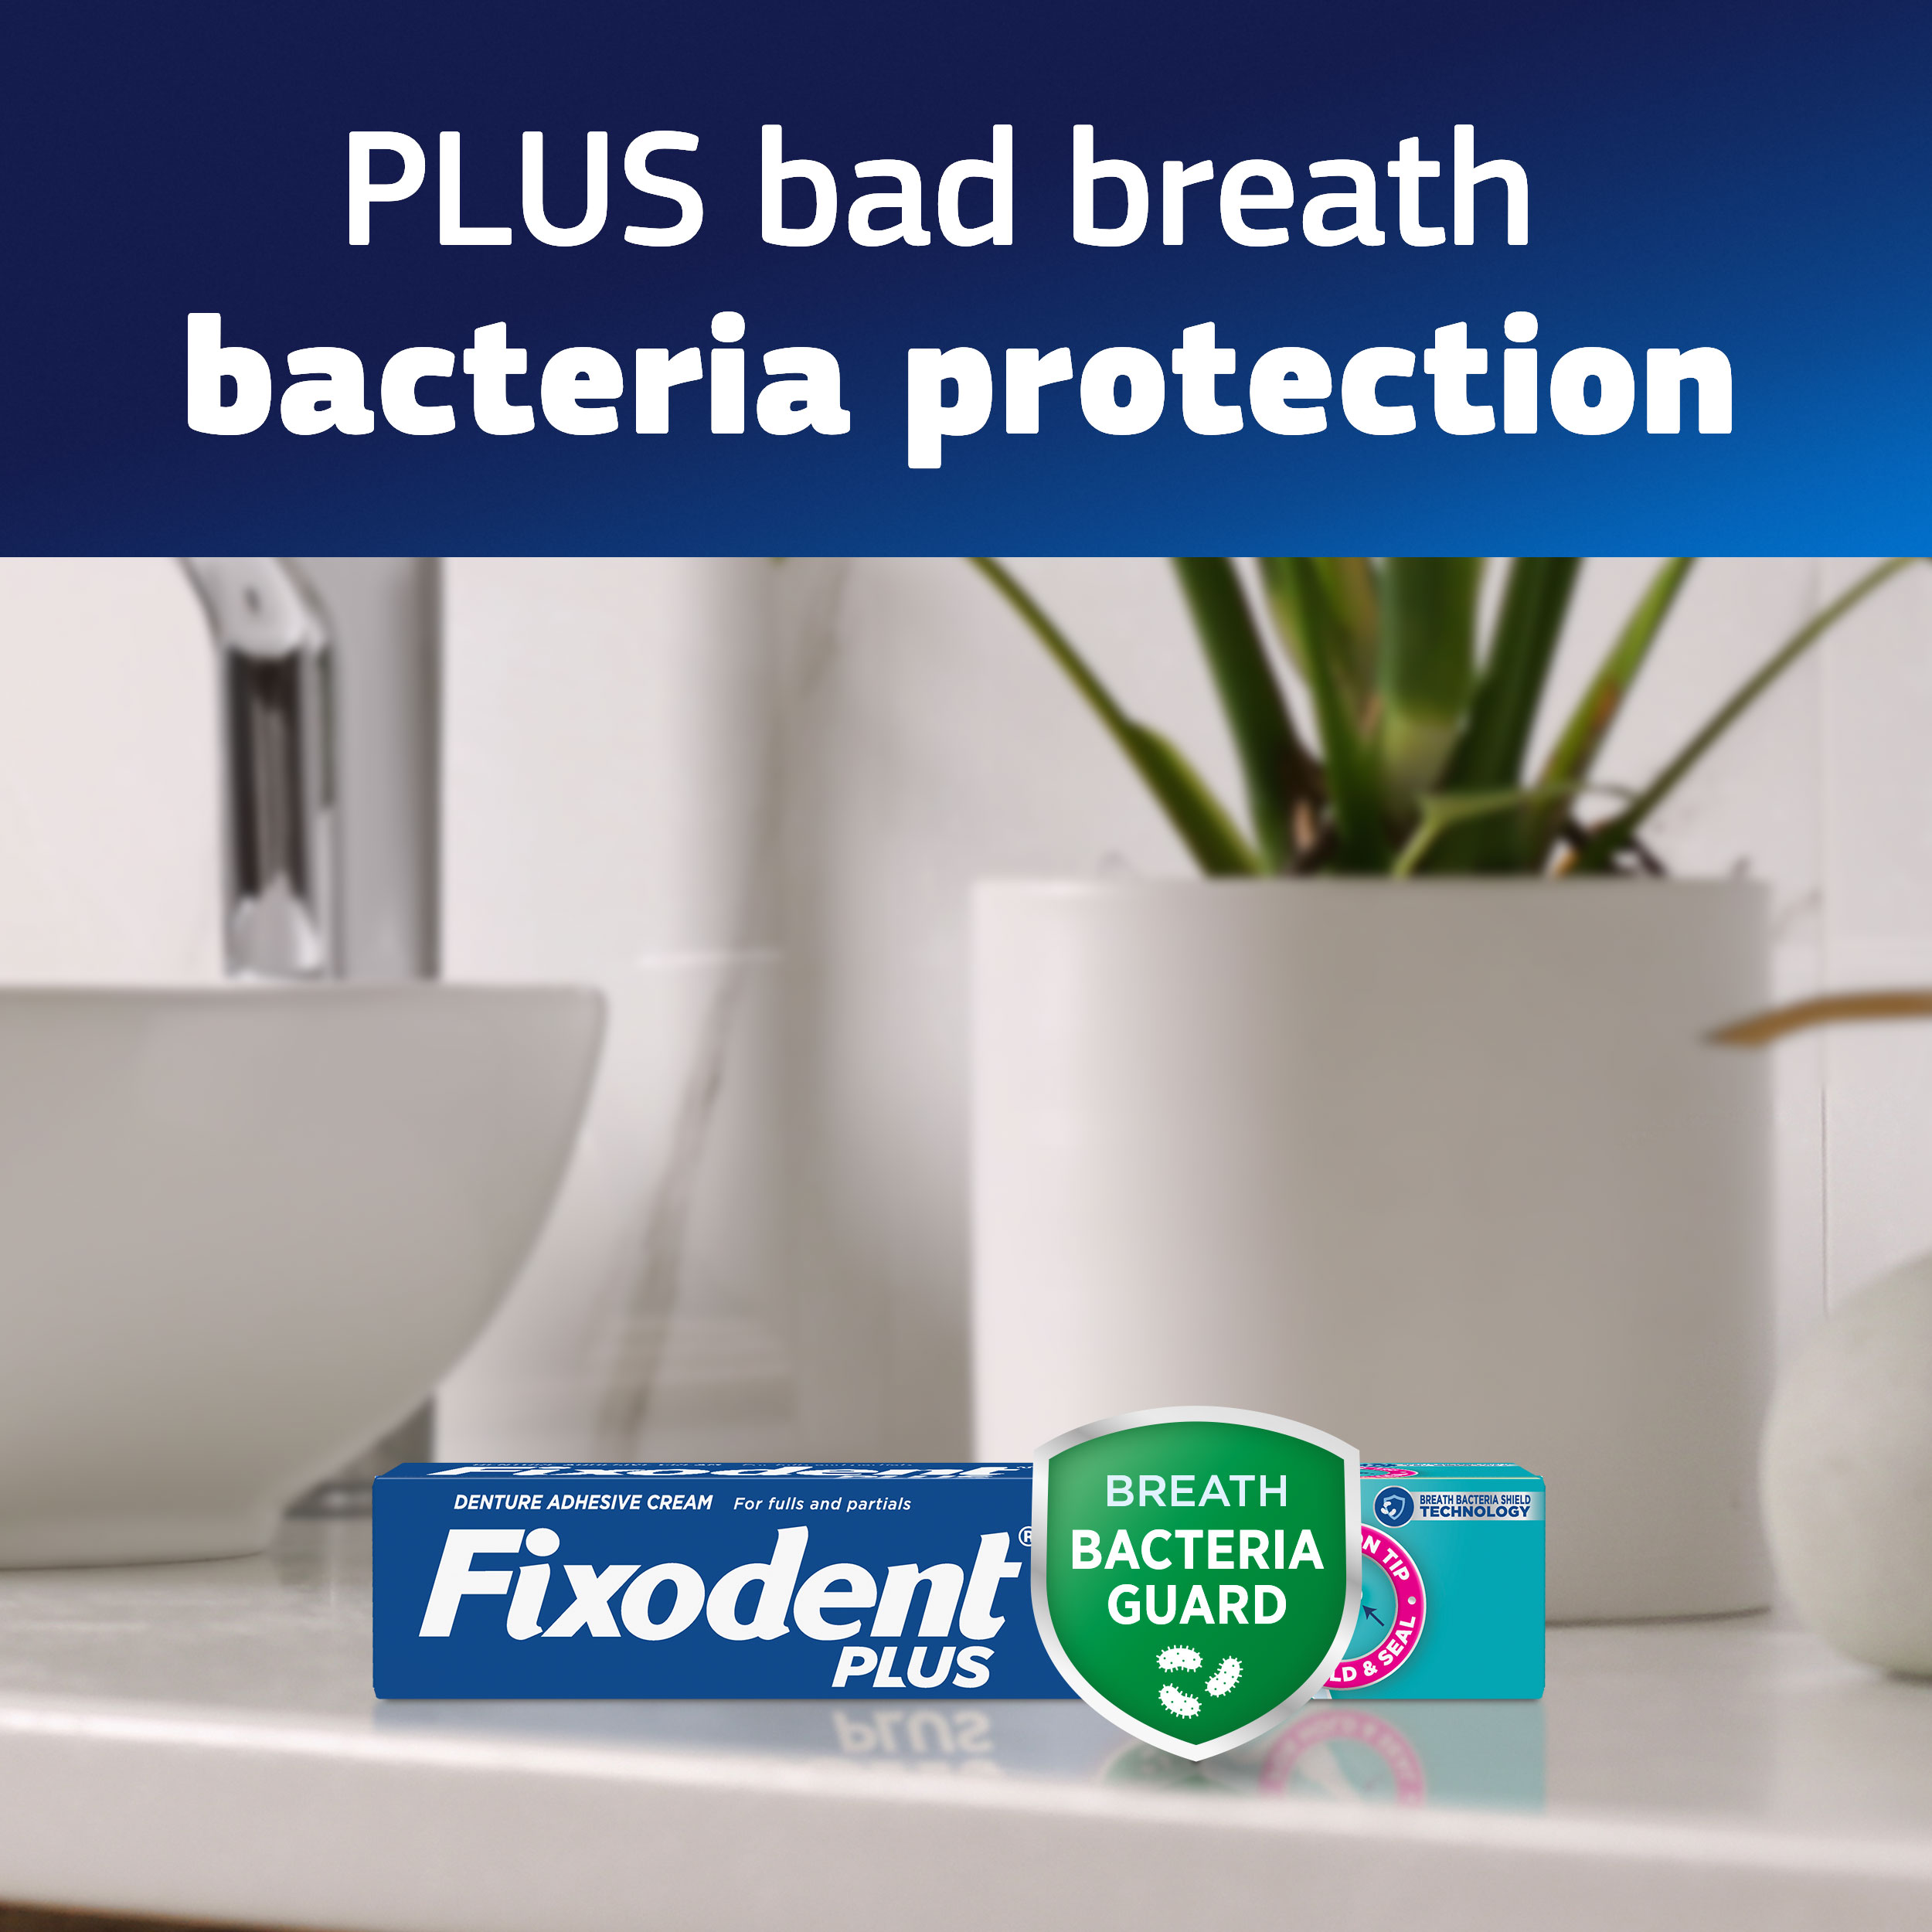 Fixodent Plus Bacteria Guard - PLUS bad breath bacteria protection